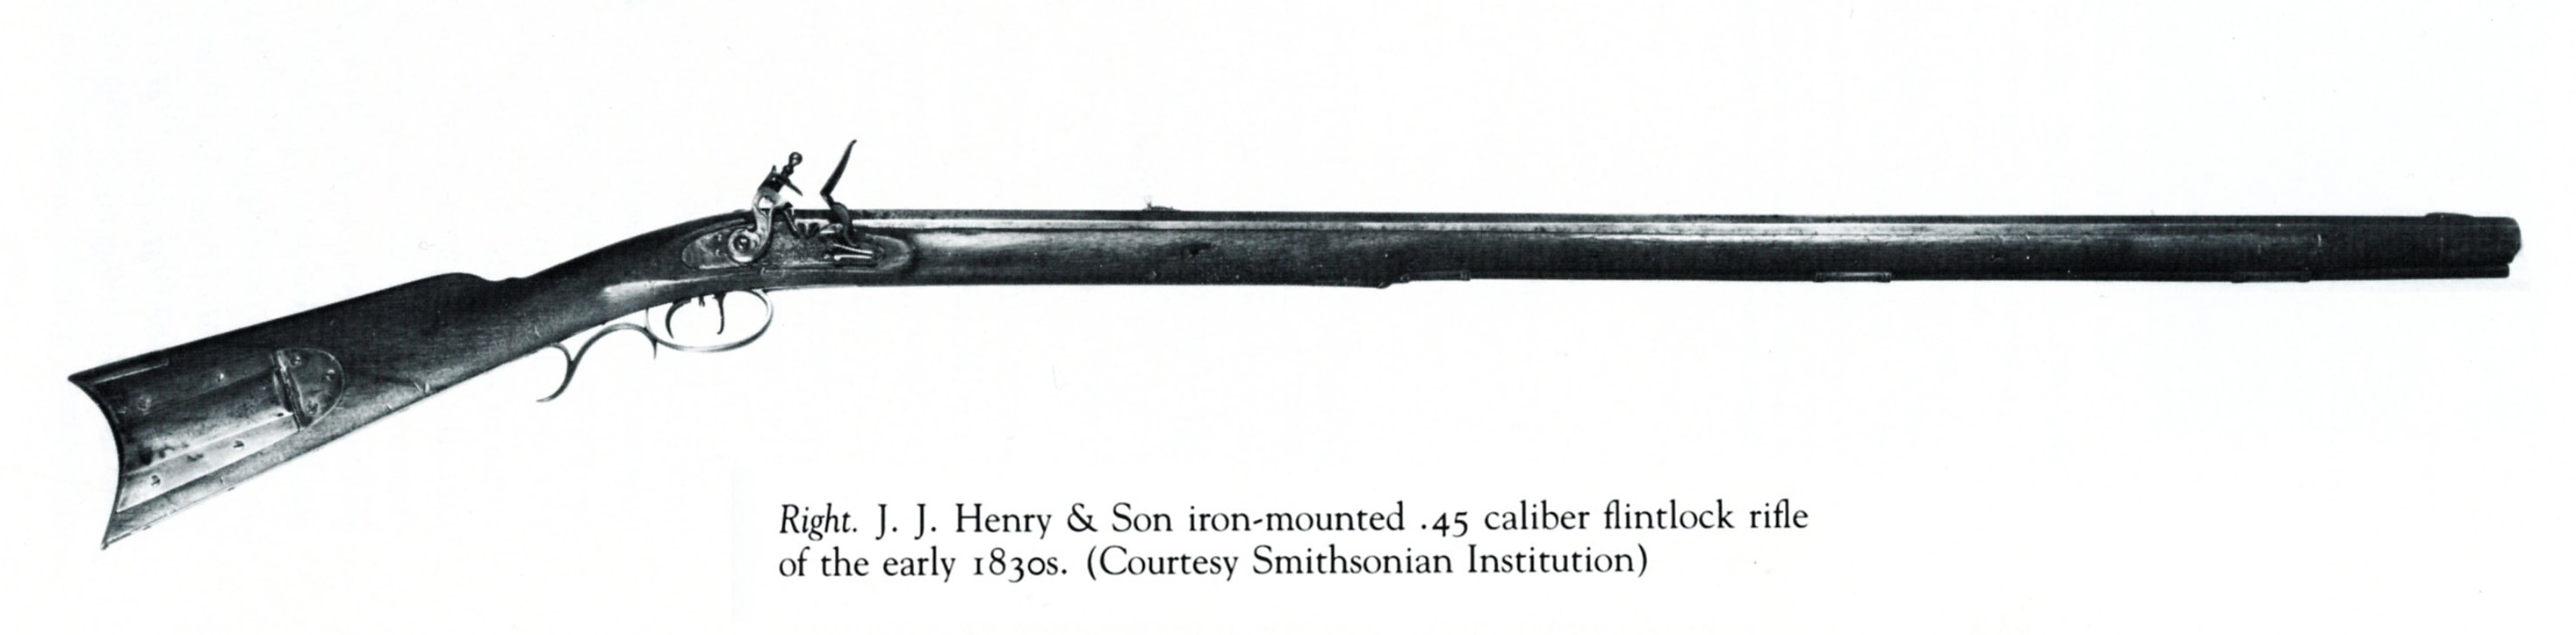 Smithsonian-Iron-Mounted-Rifle-caption.jpg